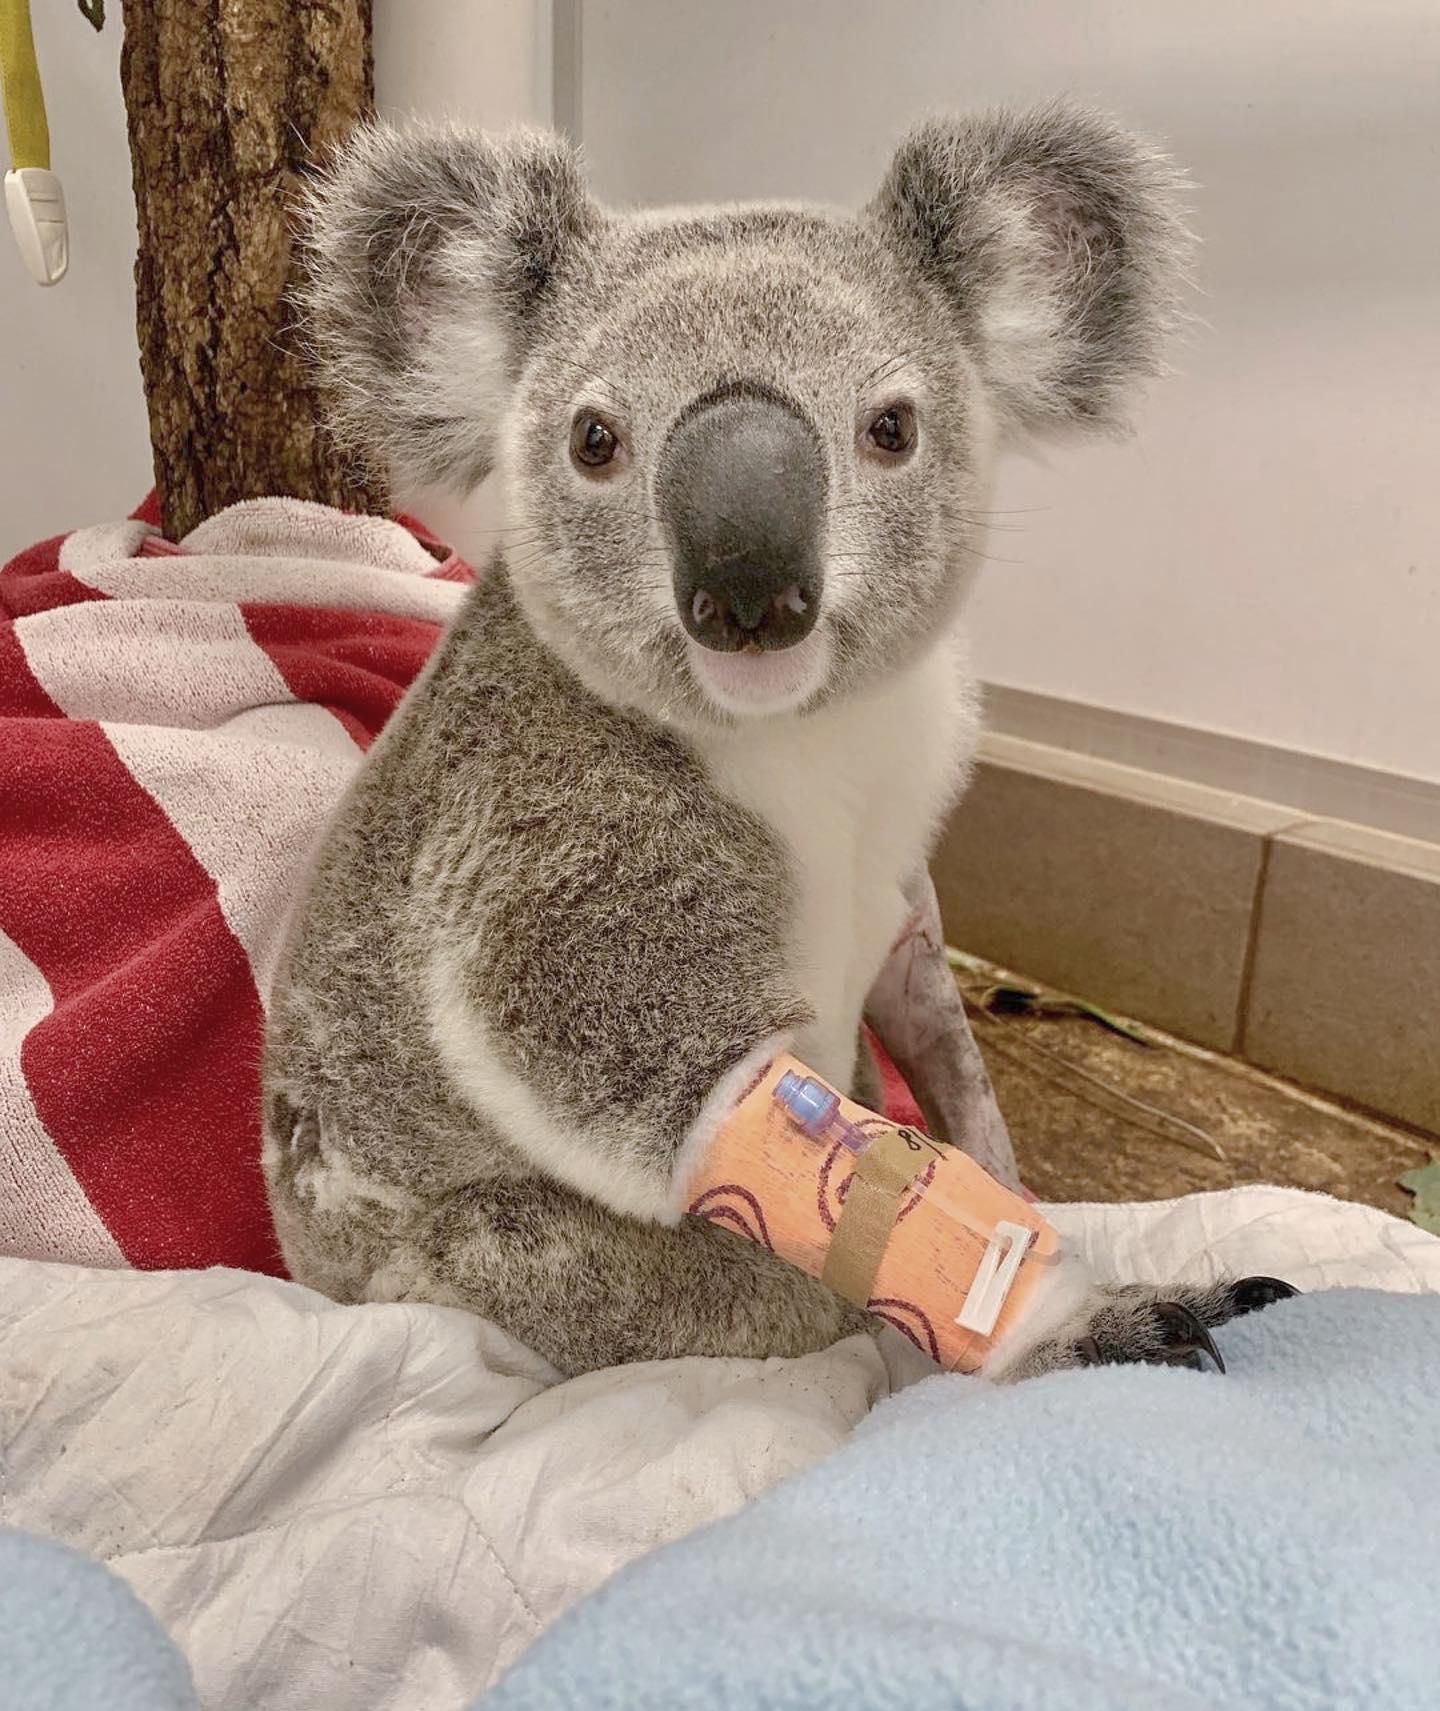 Matt the Koala at the Australia Zoo